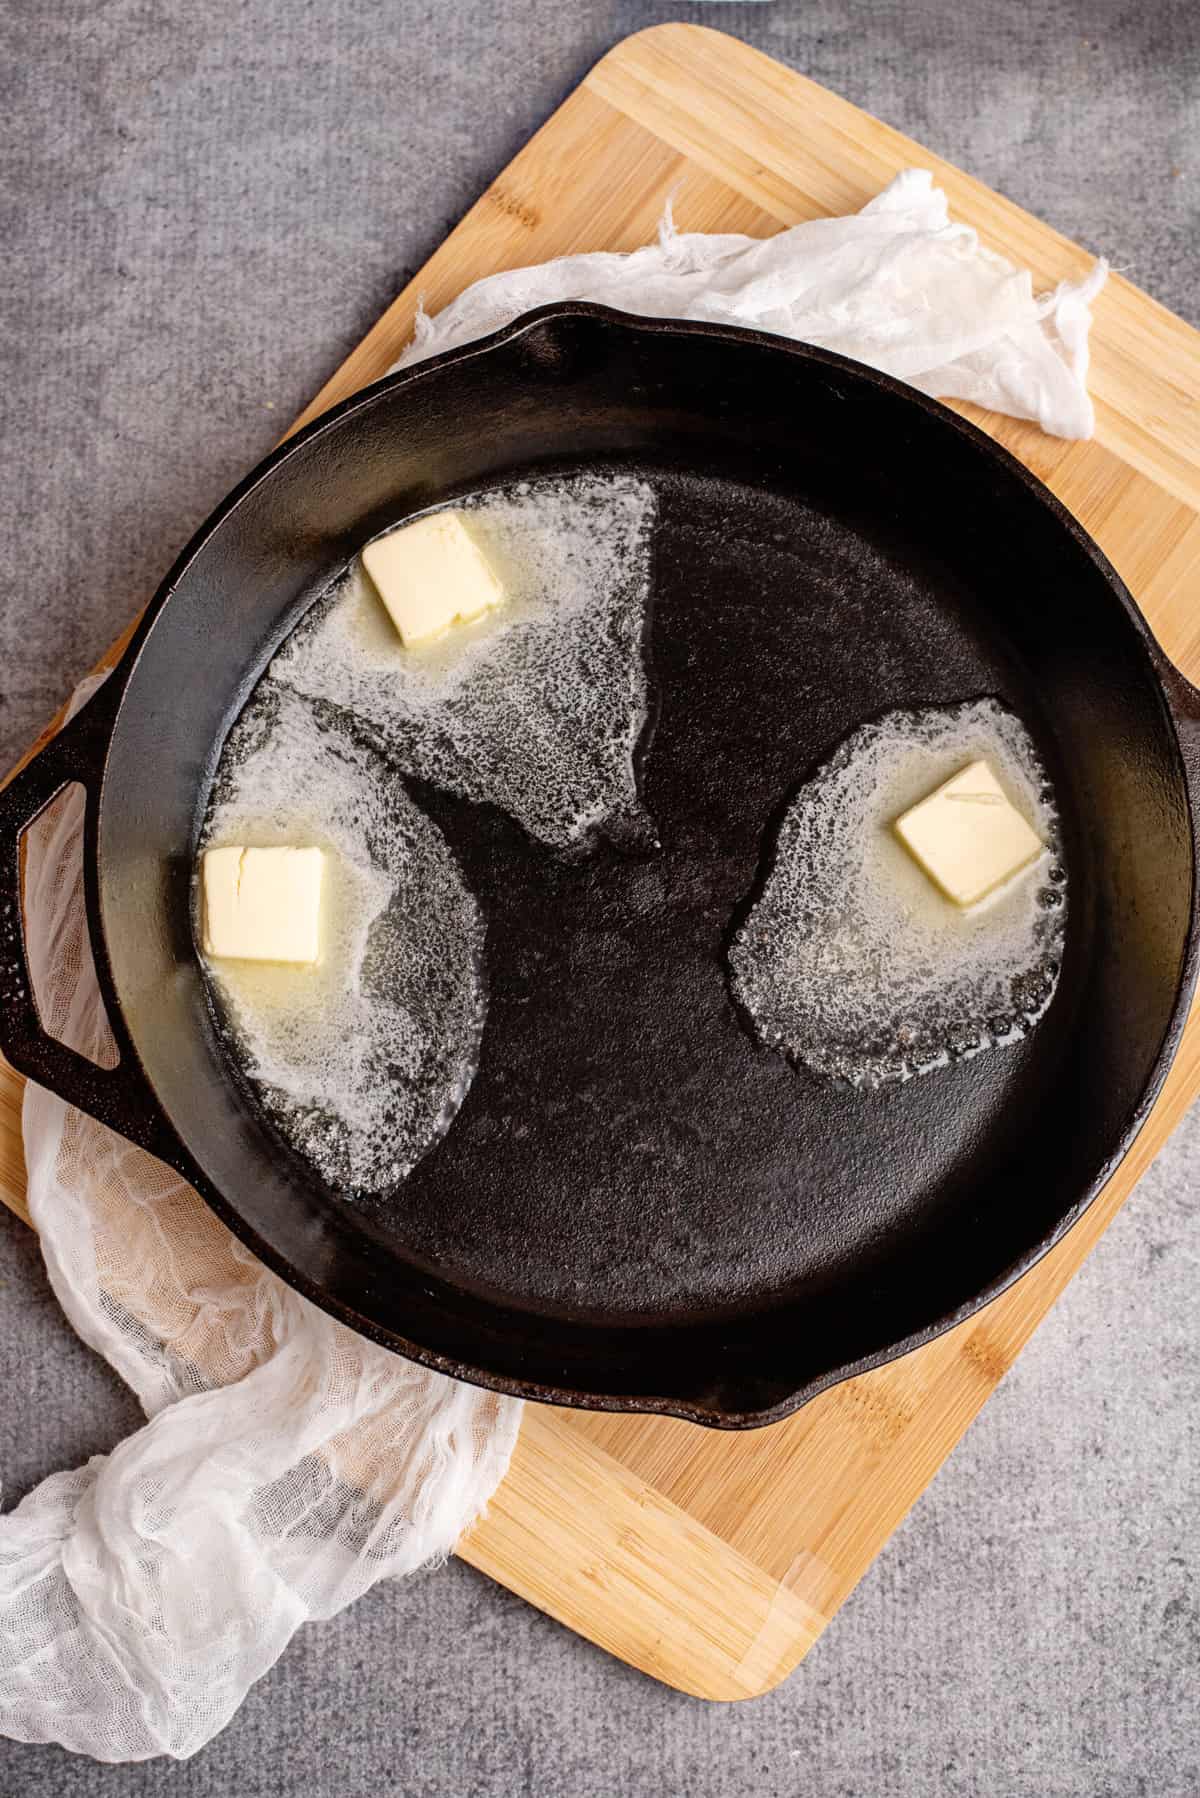 put butter into hot pan